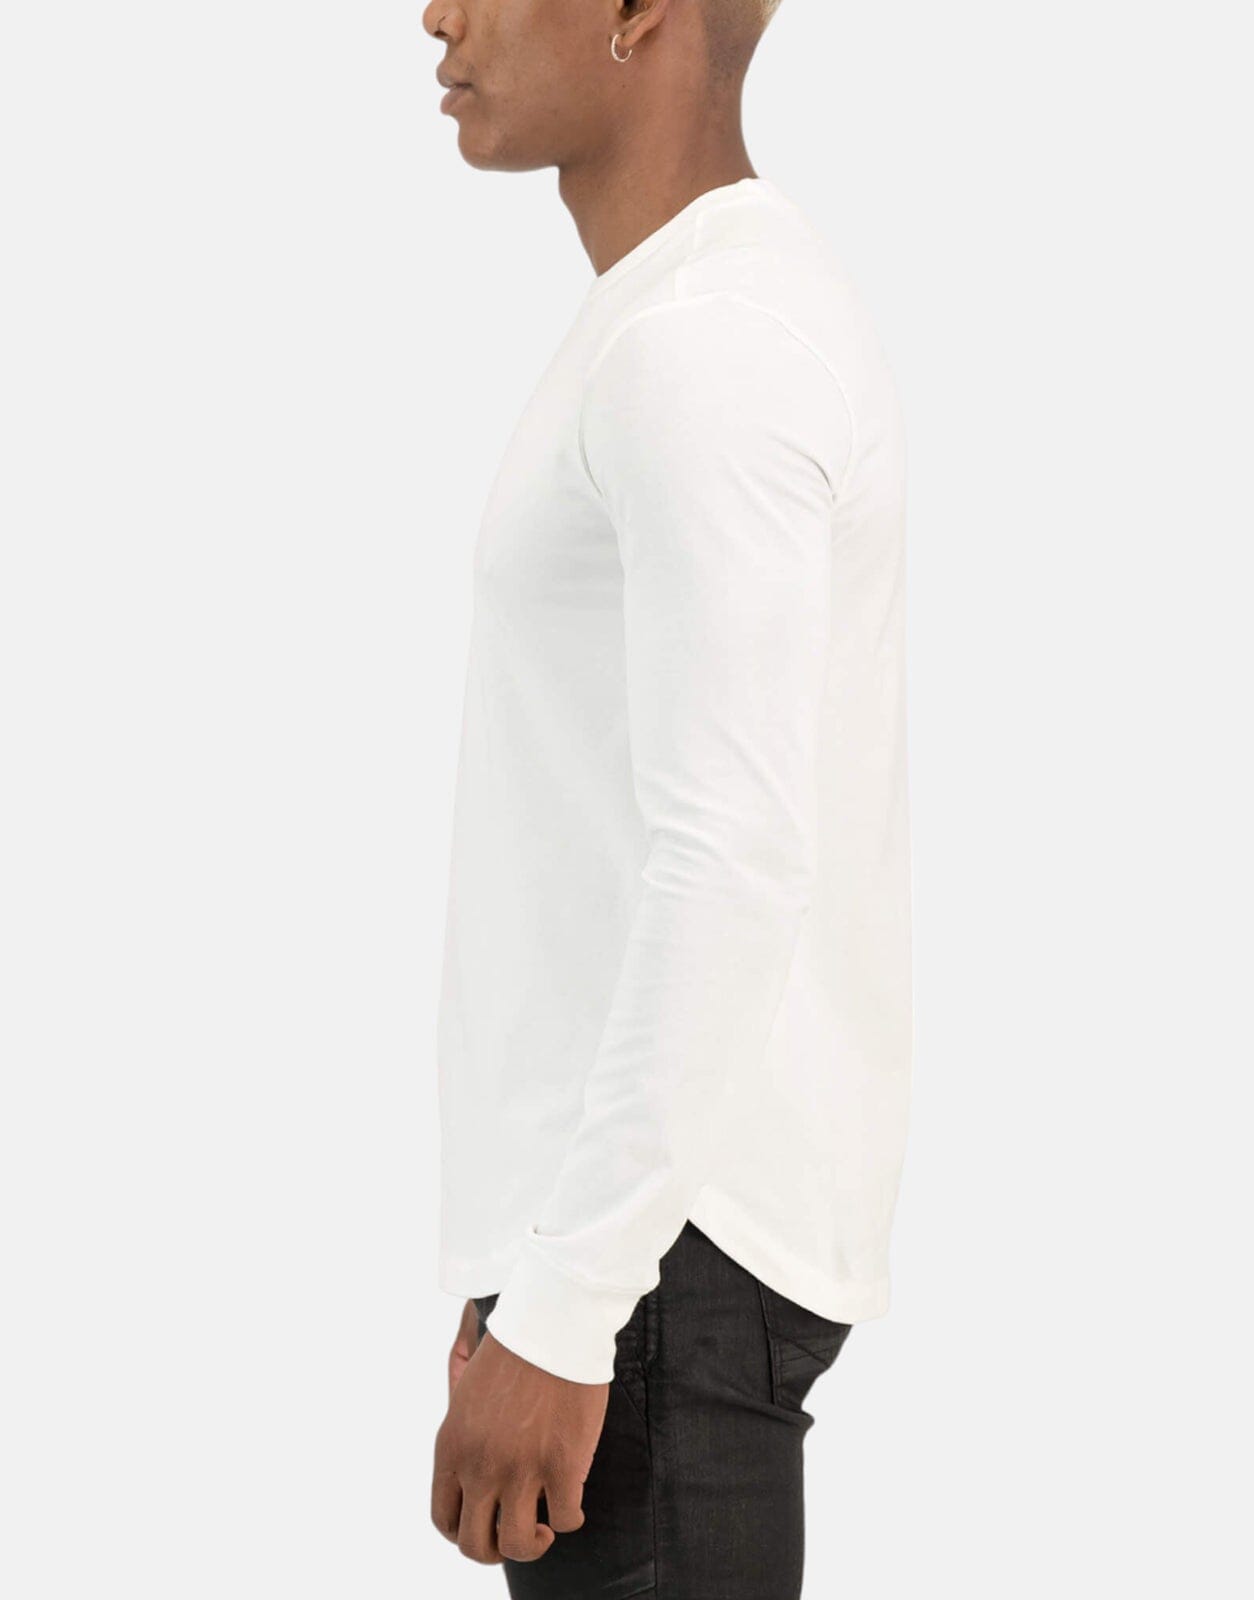 SPCC Campion White Long Sleeve T-Shirt - Subwear